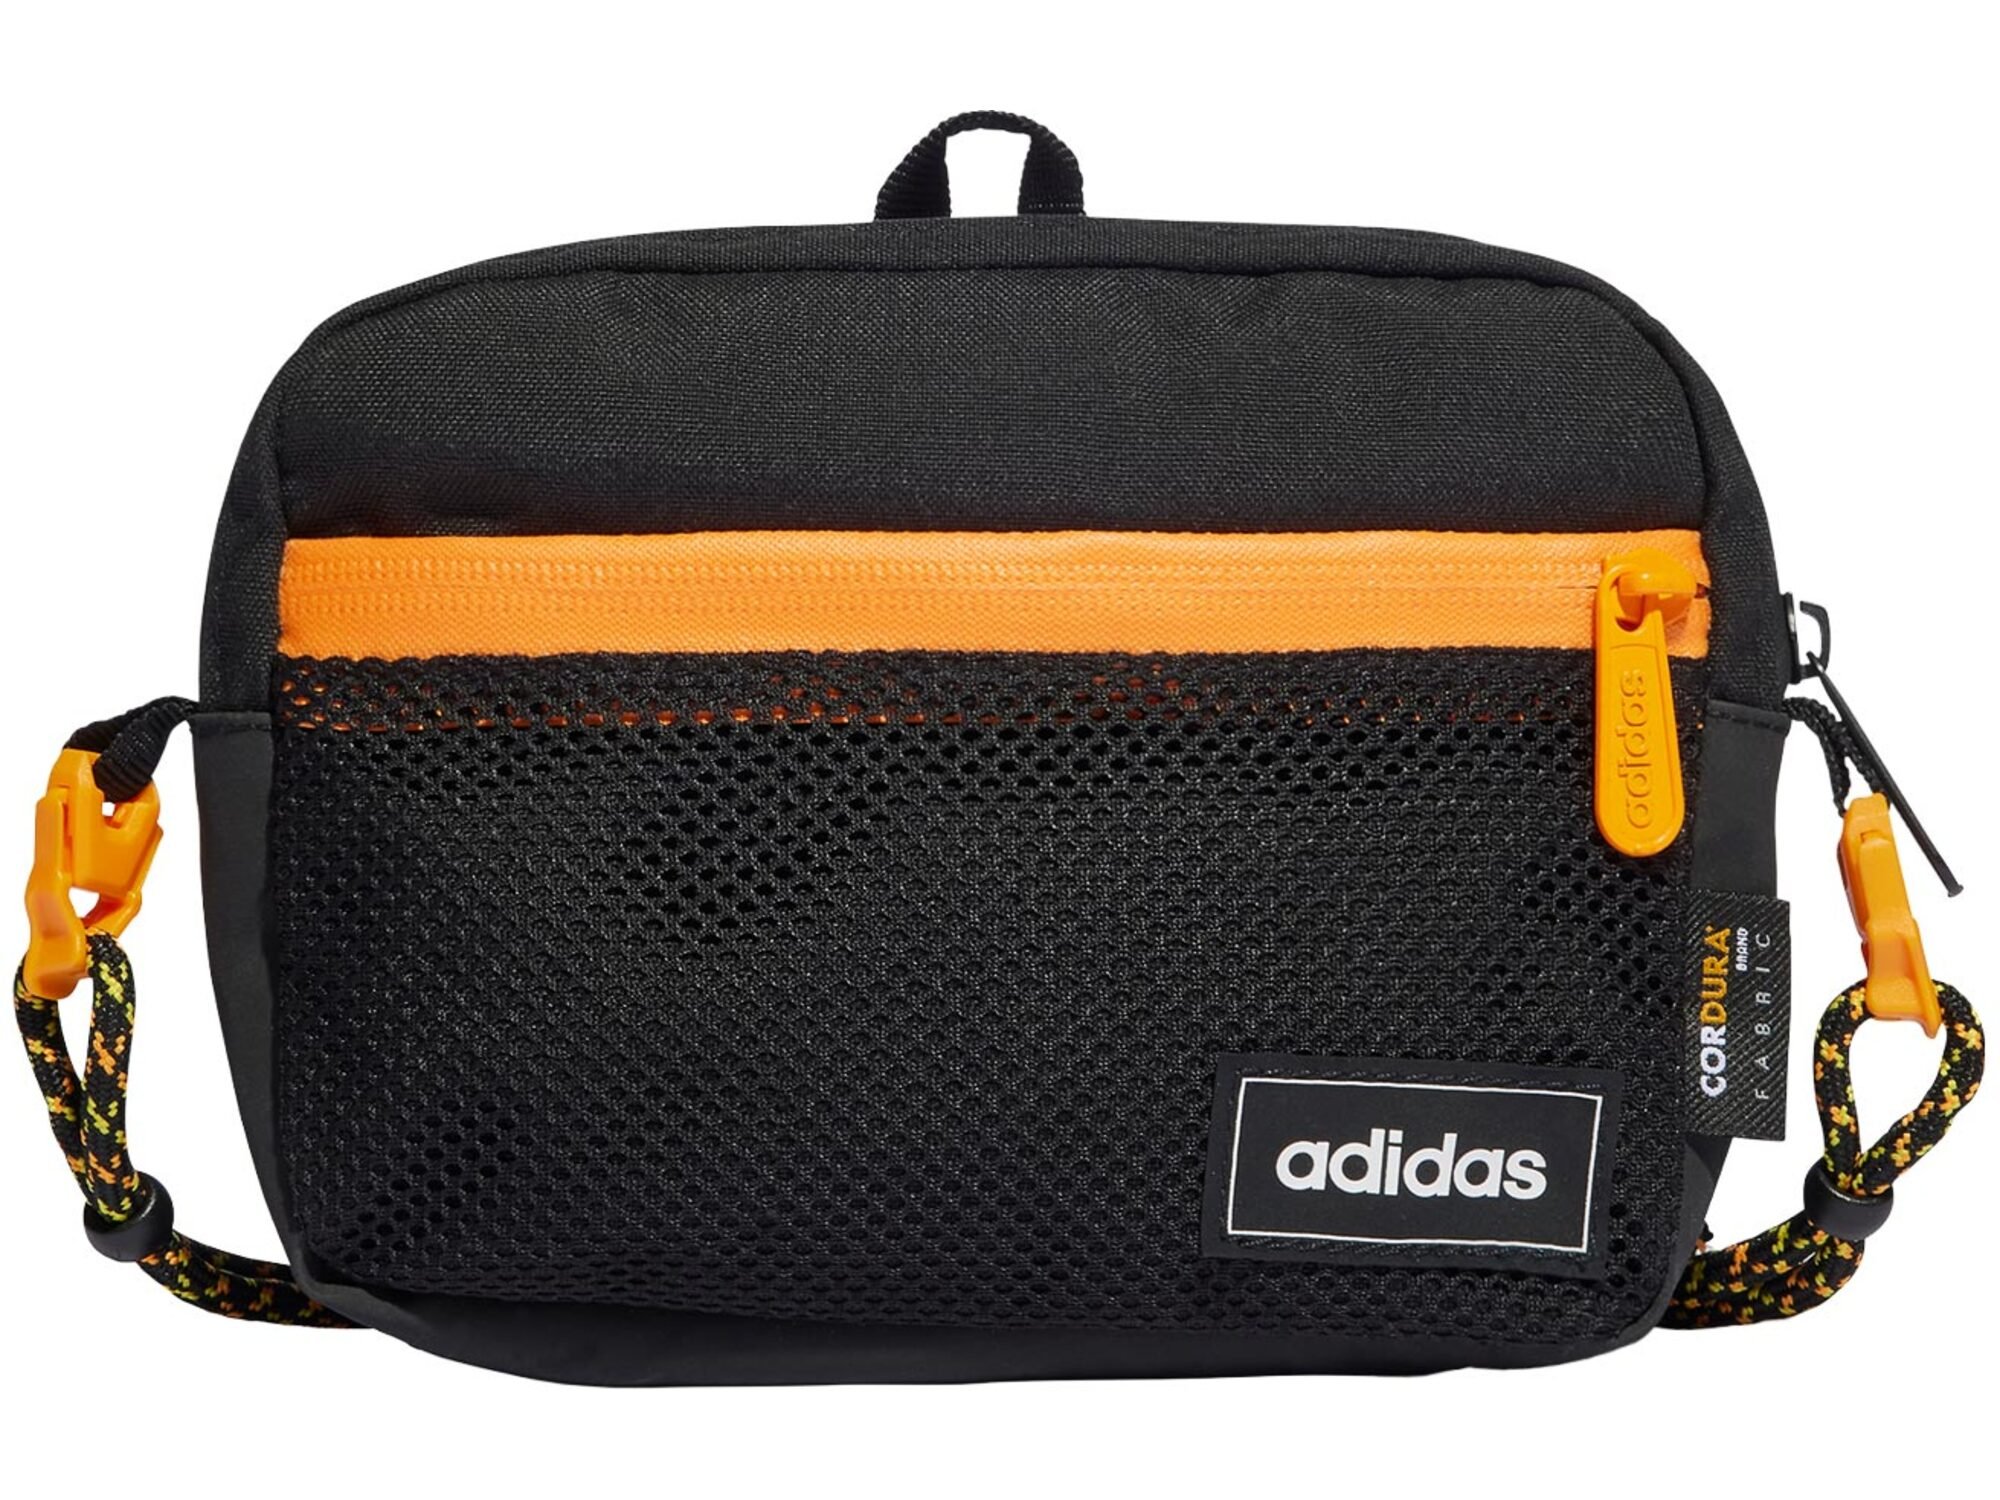 Adidas Street Bag